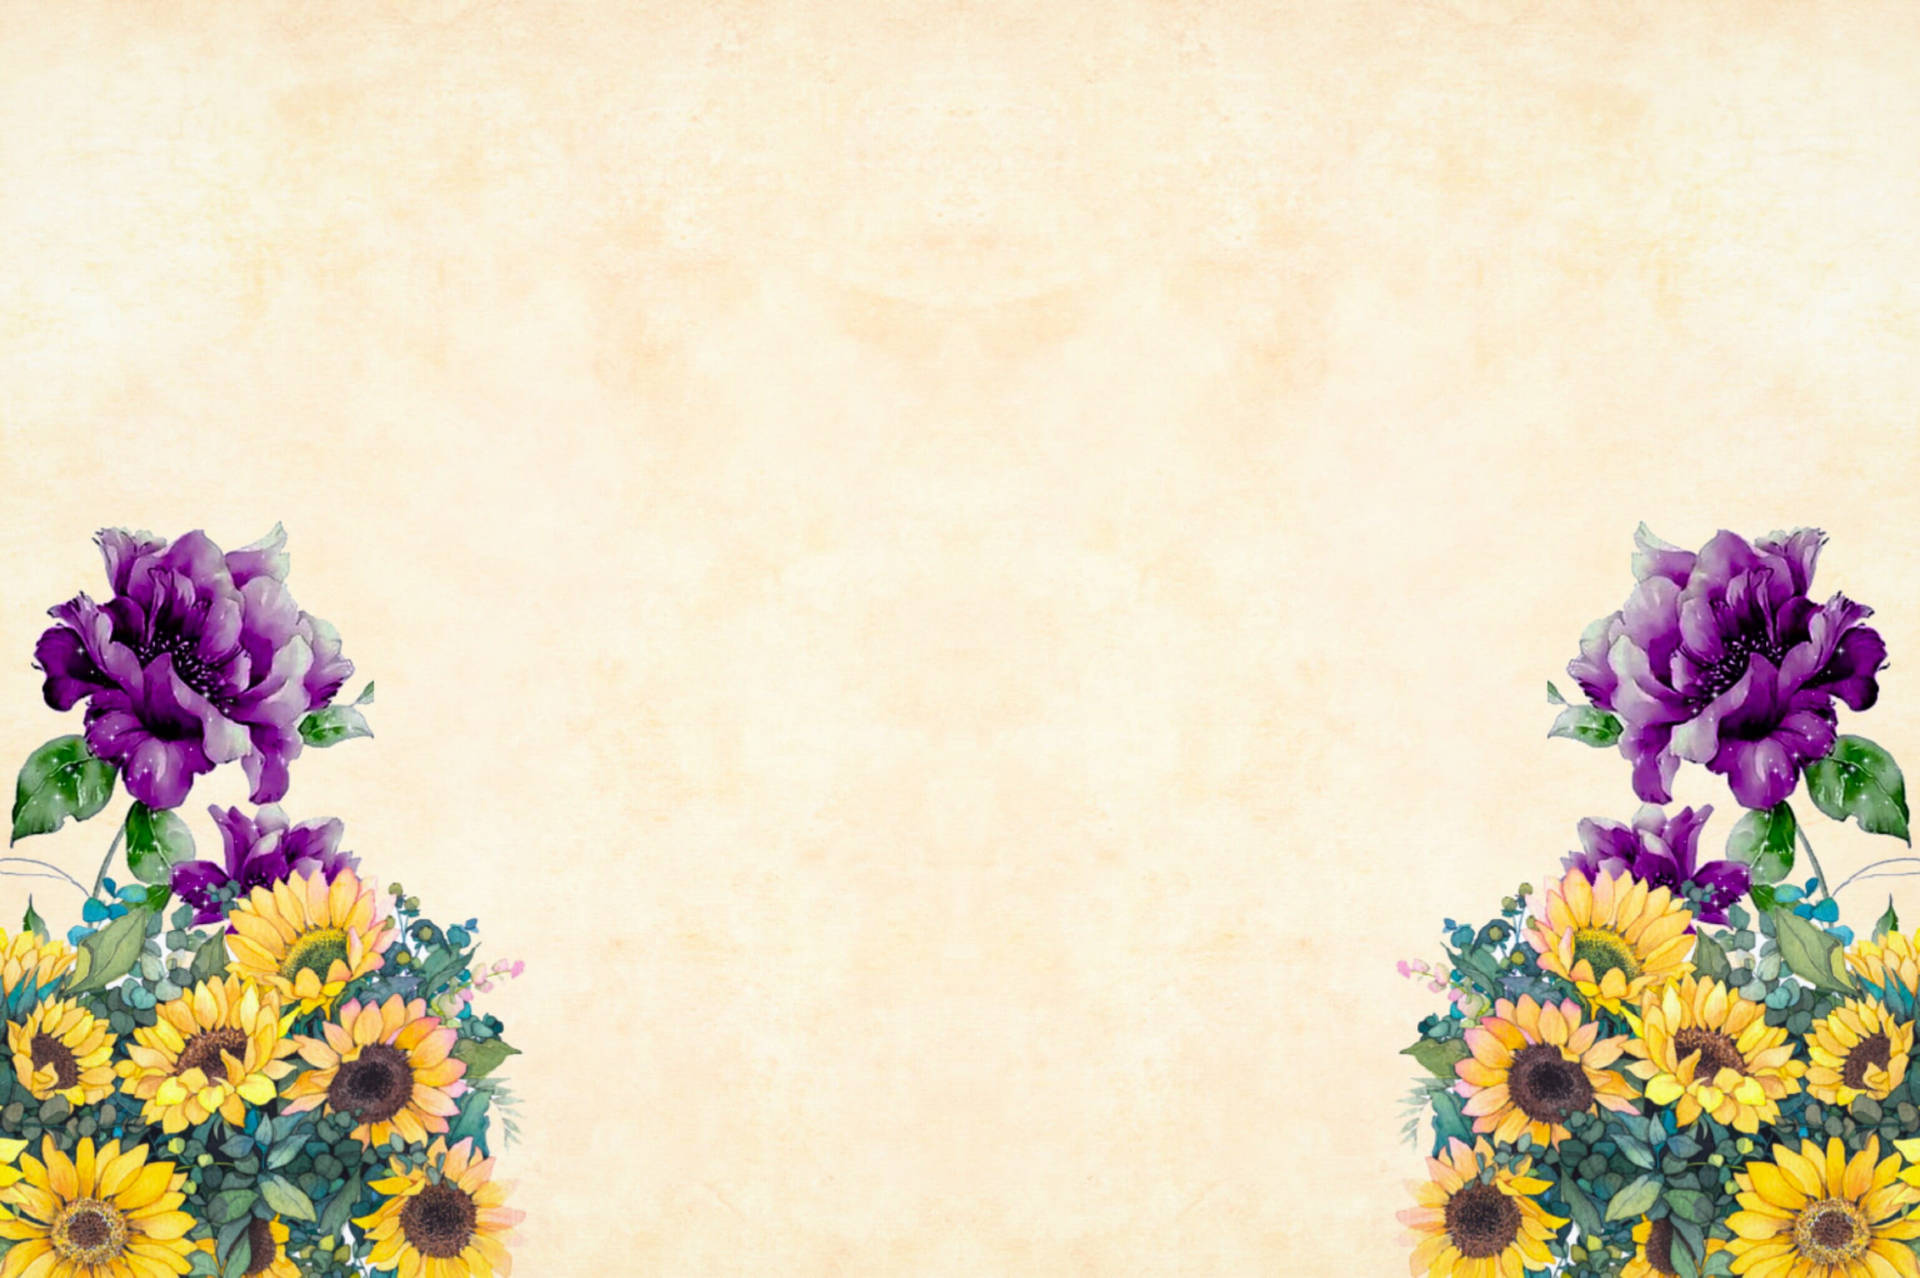 Background Design With Sunflower Background